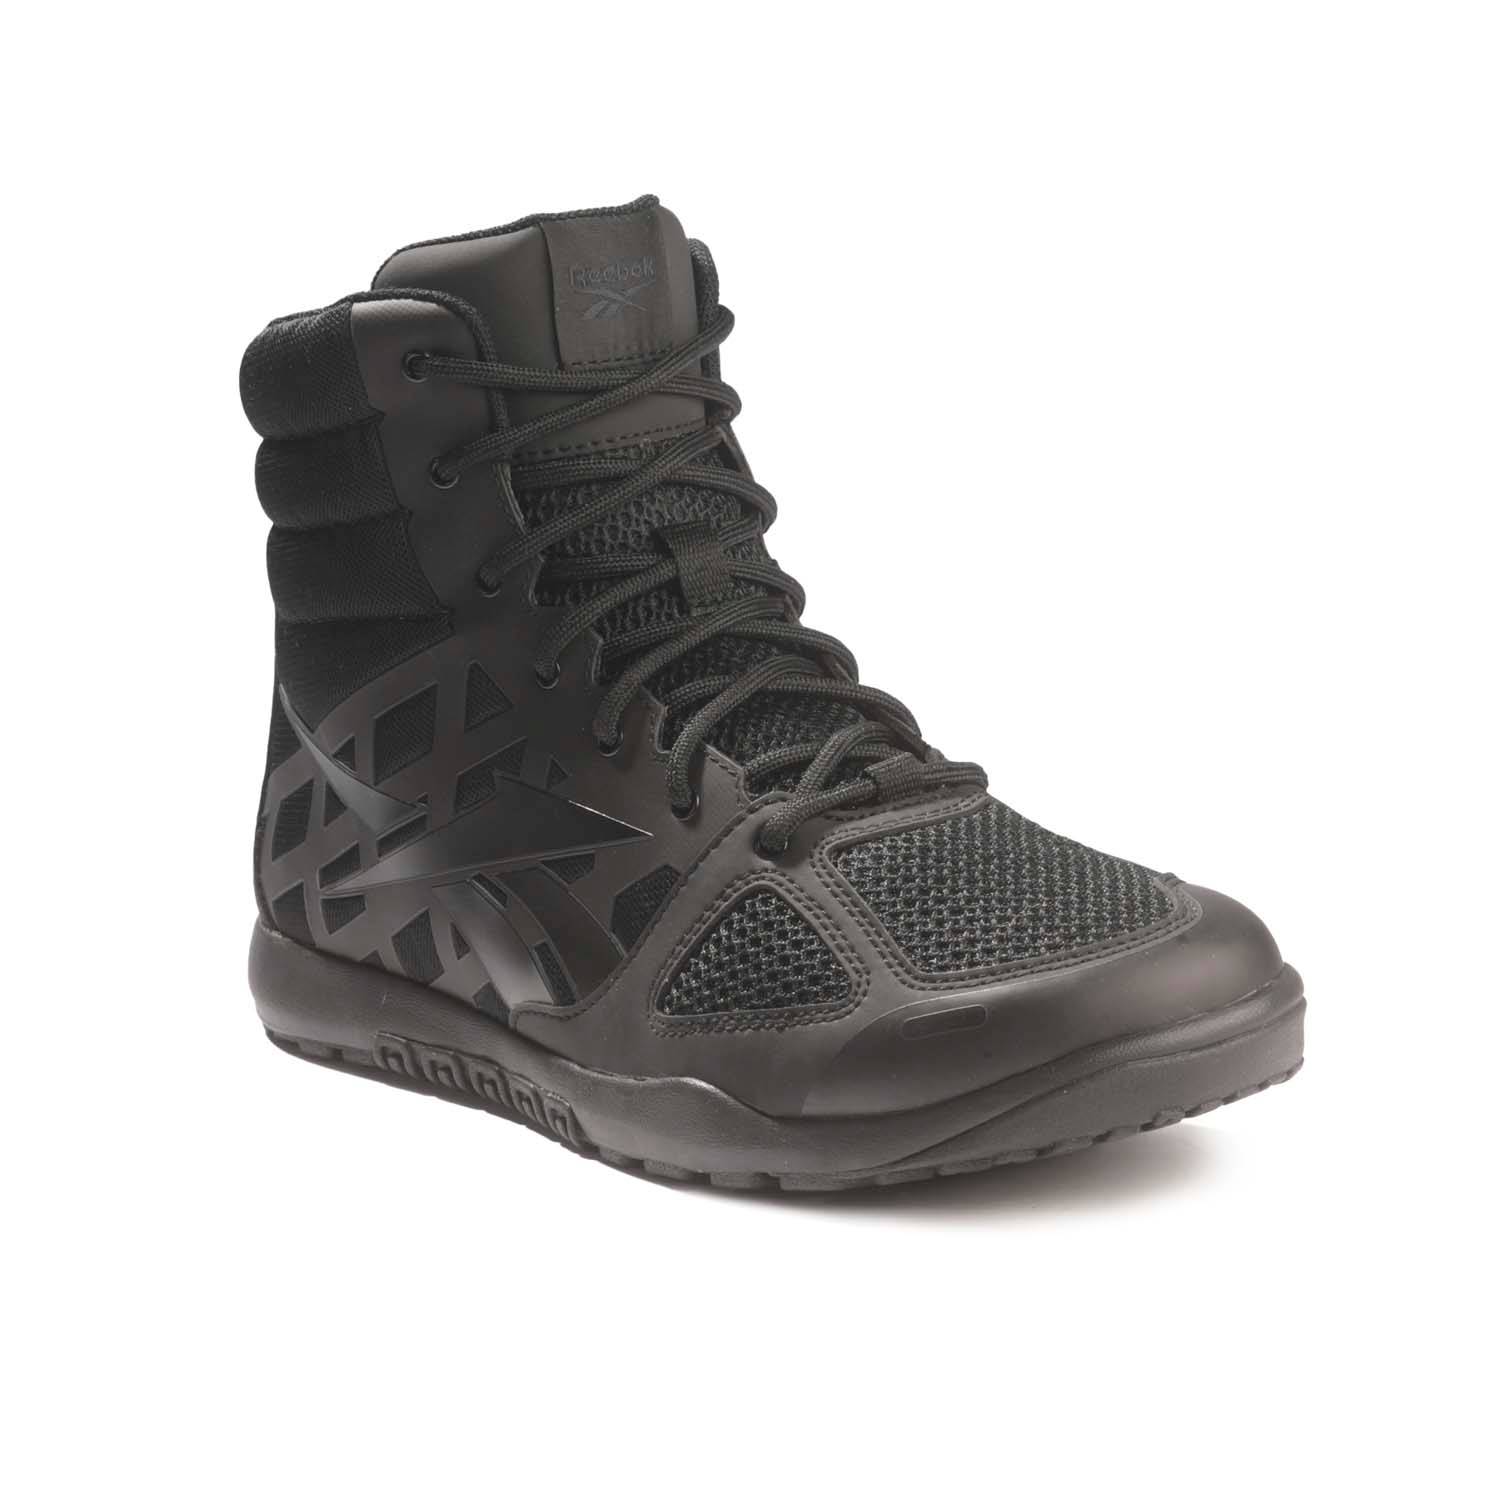 Reebok Nano Tactical 6" Side Zip Duty Boots